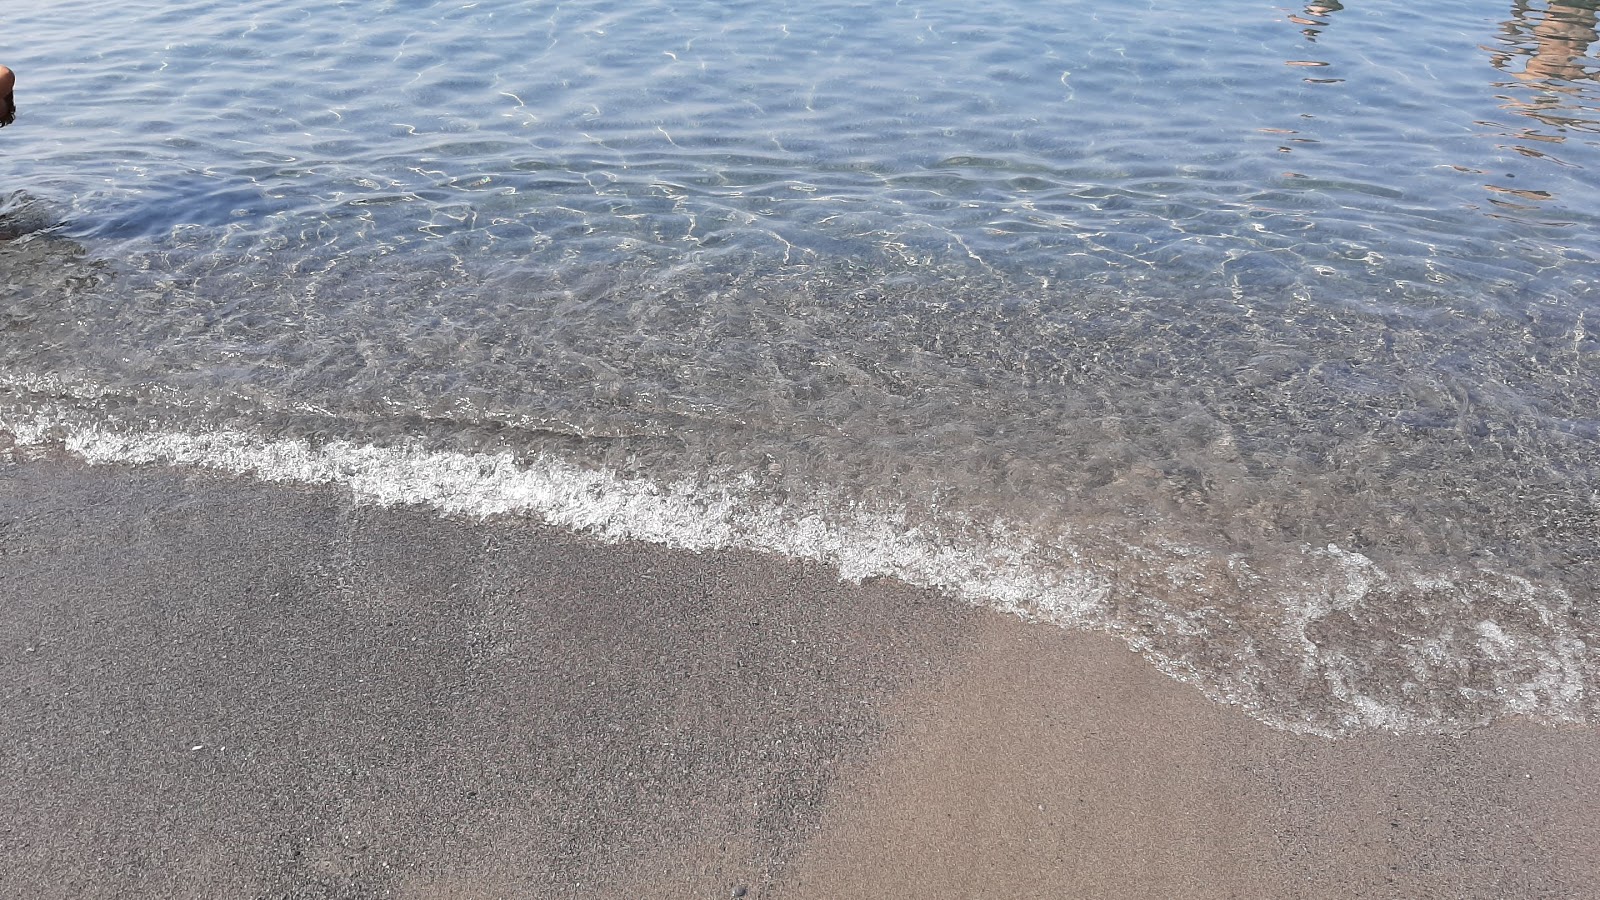 Foto von Spiaggia di Macarro befindet sich in natürlicher umgebung